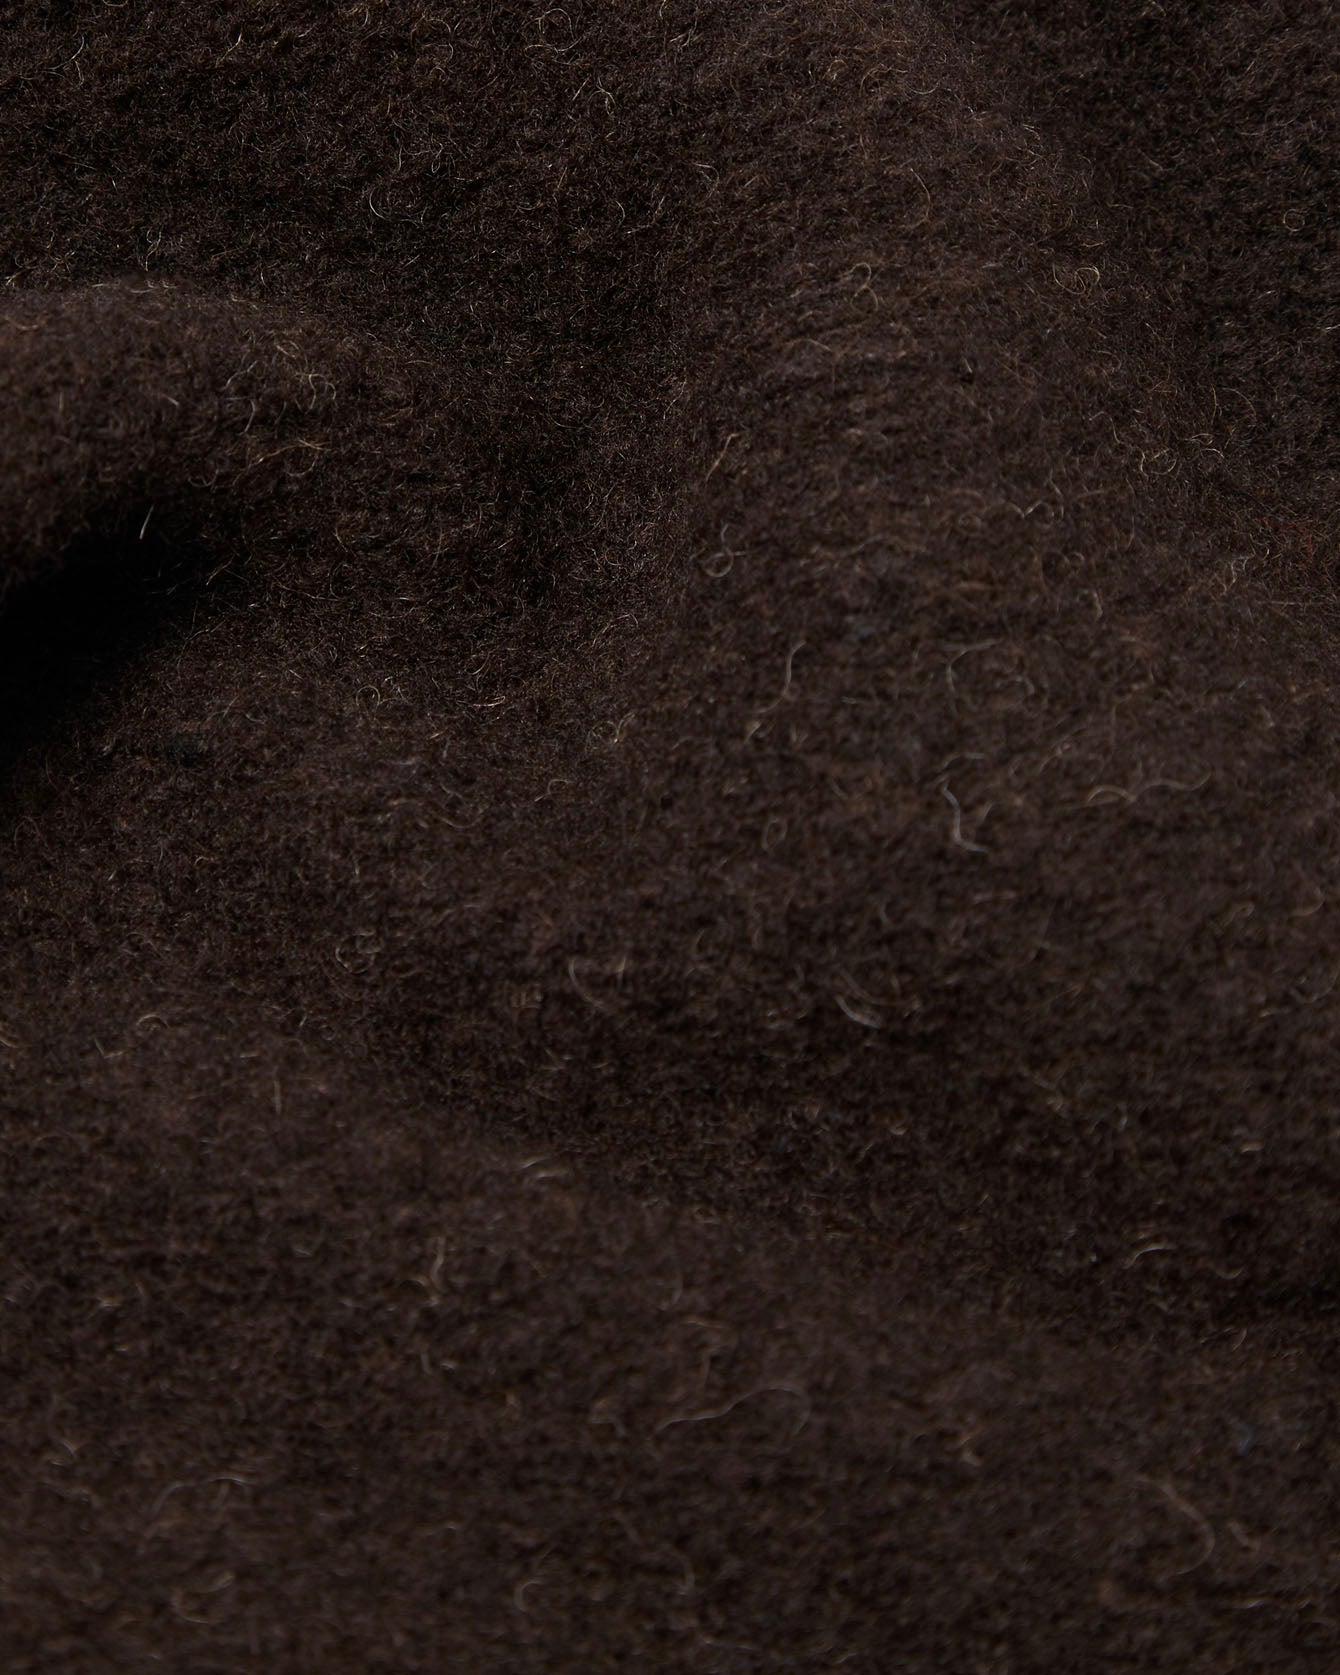 Blanket Cardigan Studio Wool Mix Brown